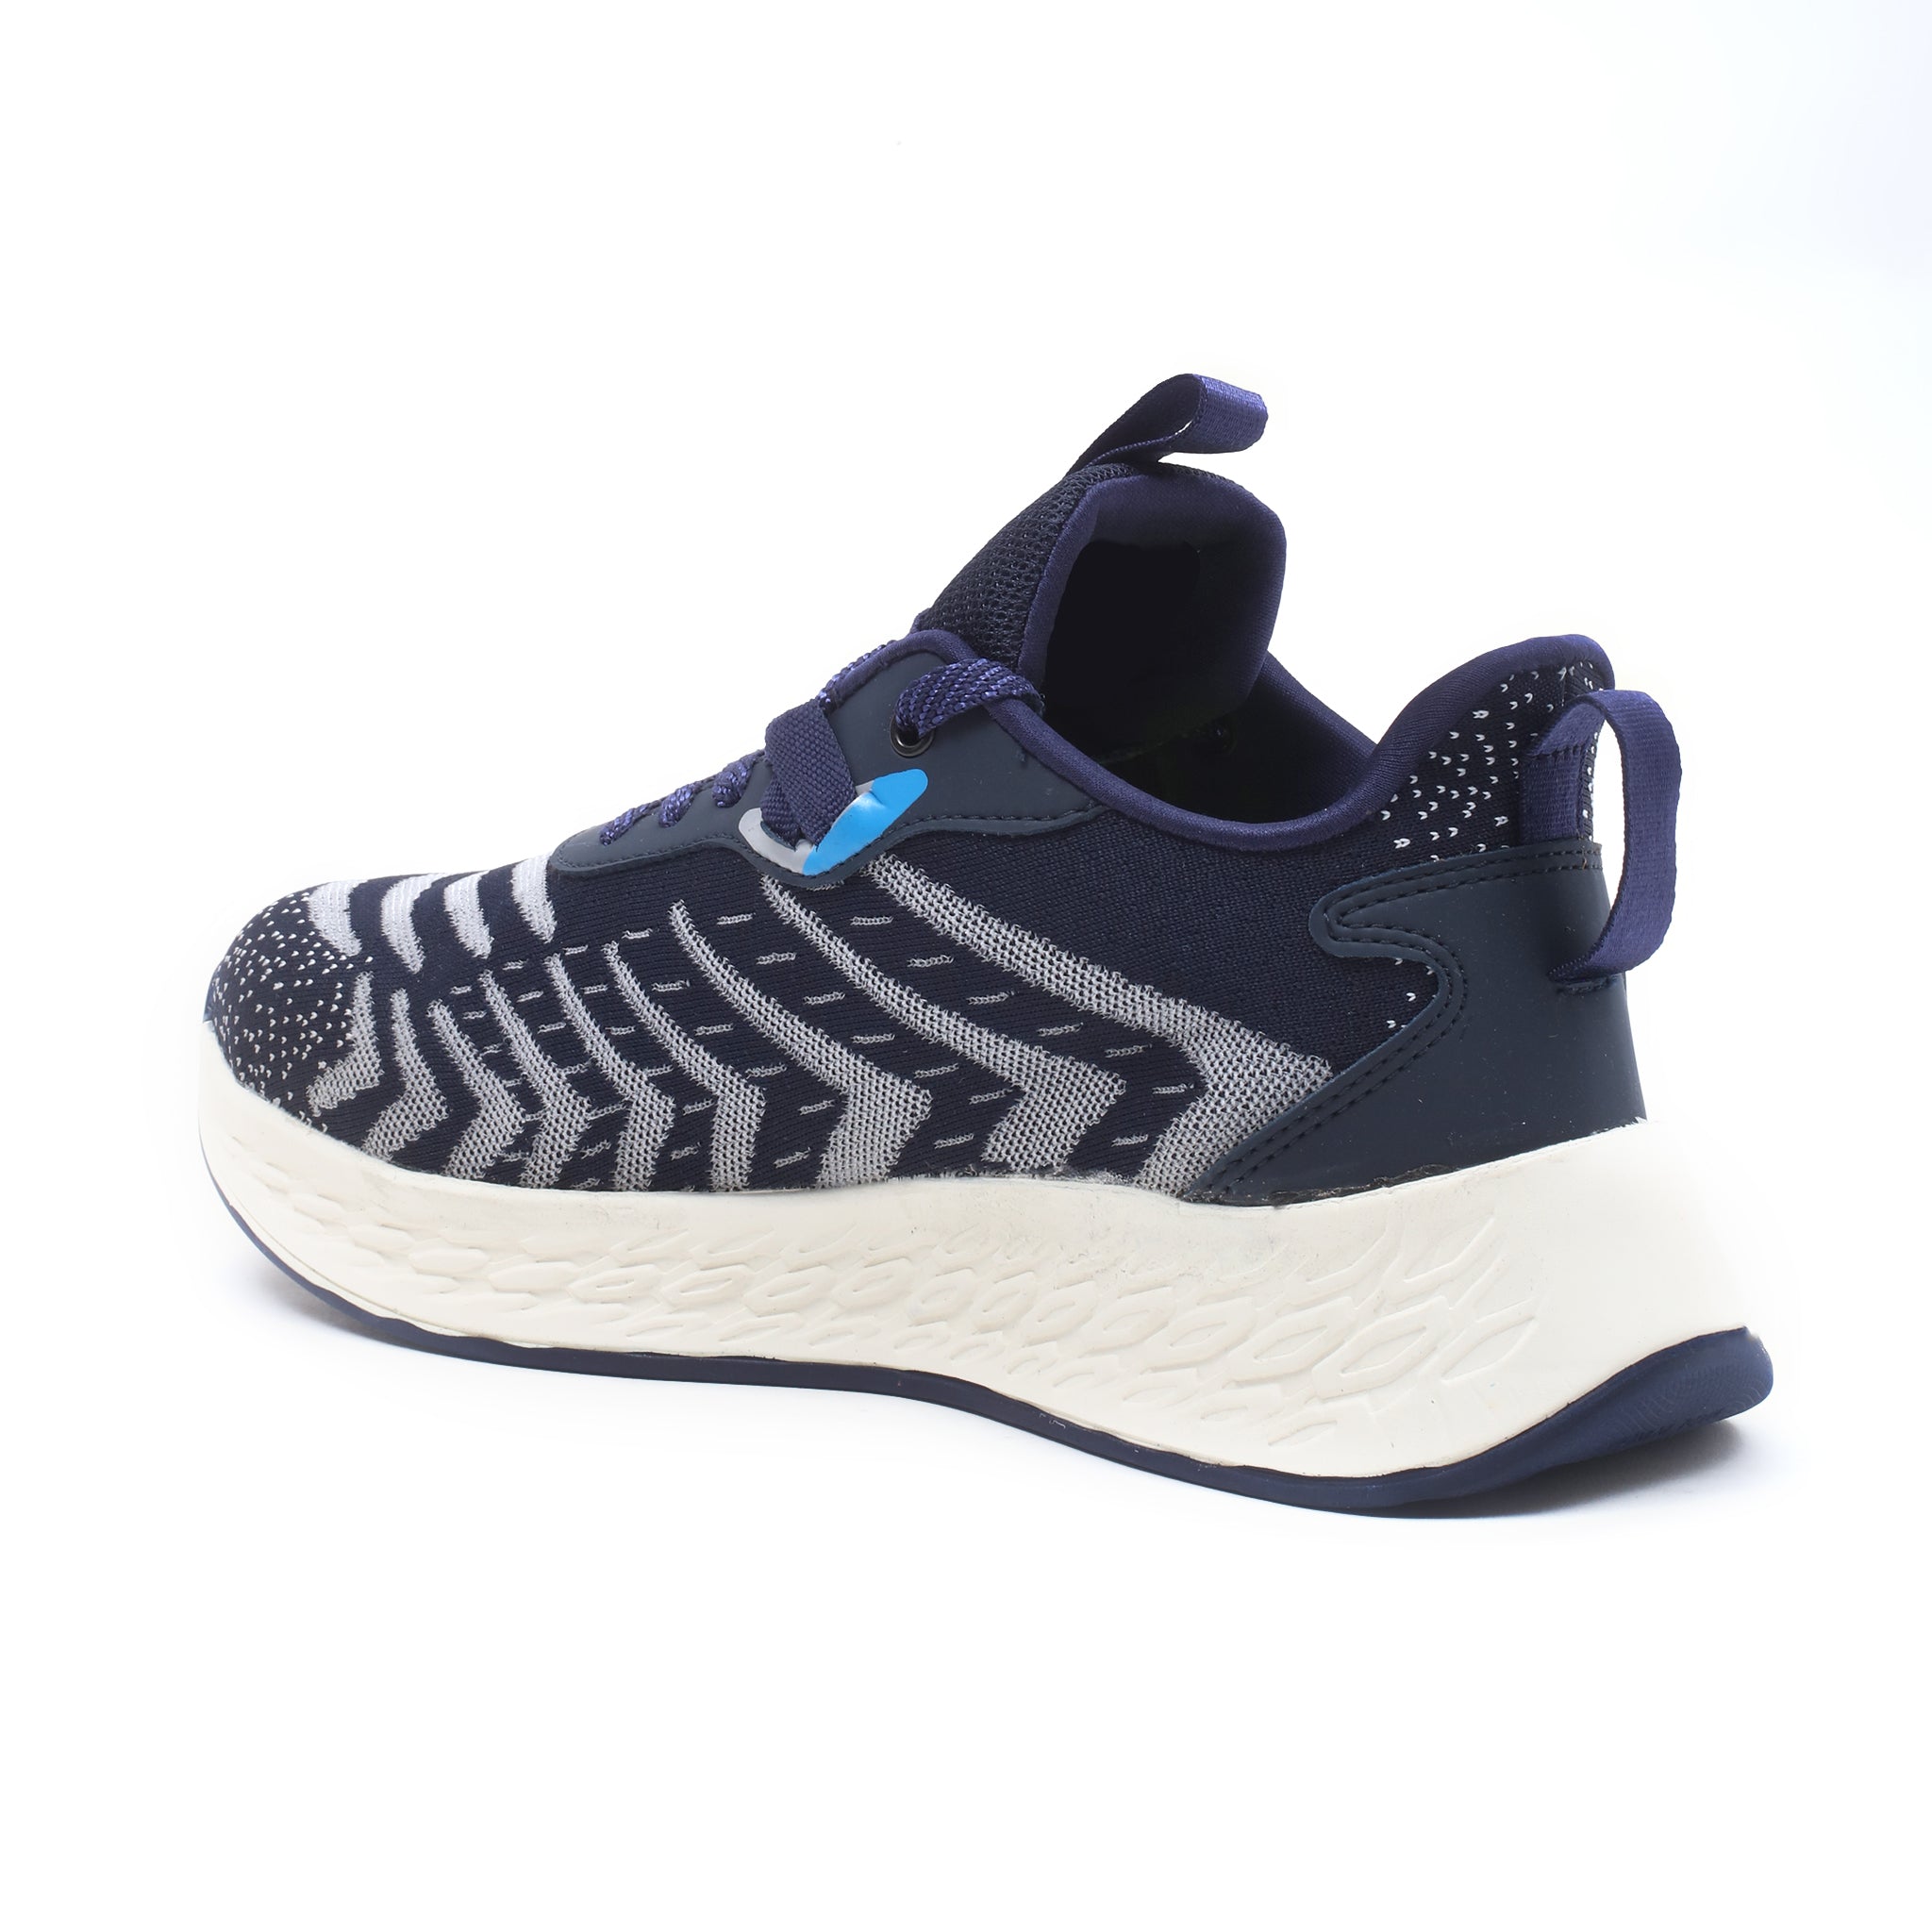 Impakto  Pulsestep  Men's  Blue Running Shoes